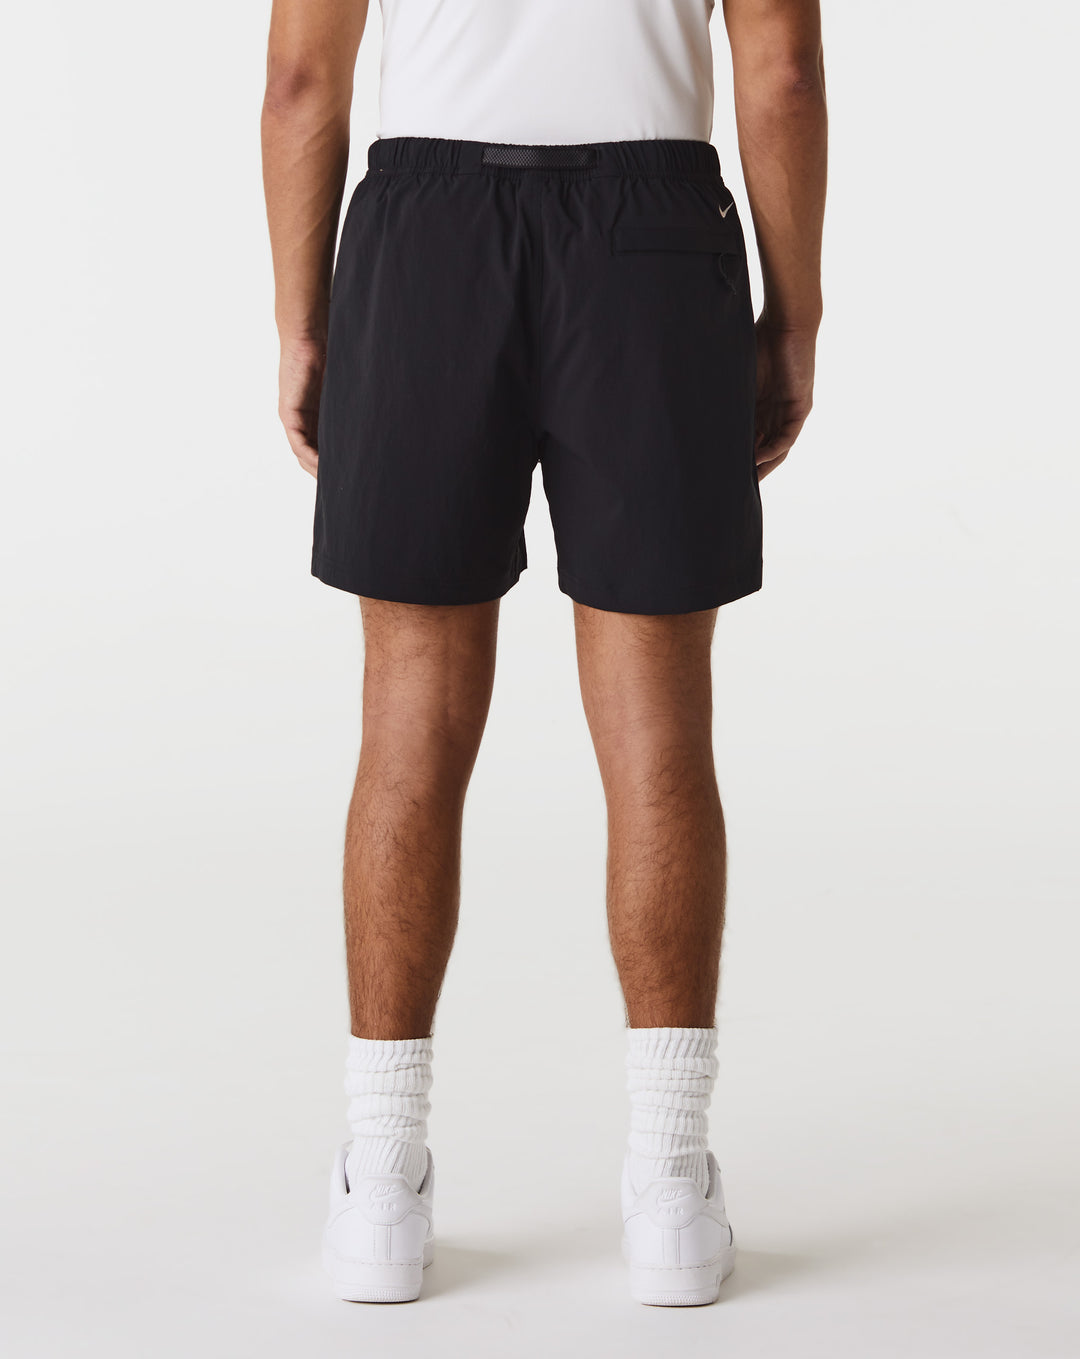 Nike adidas x Lego Kids Basketball Pants  - Cheap Urlfreeze Jordan outlet